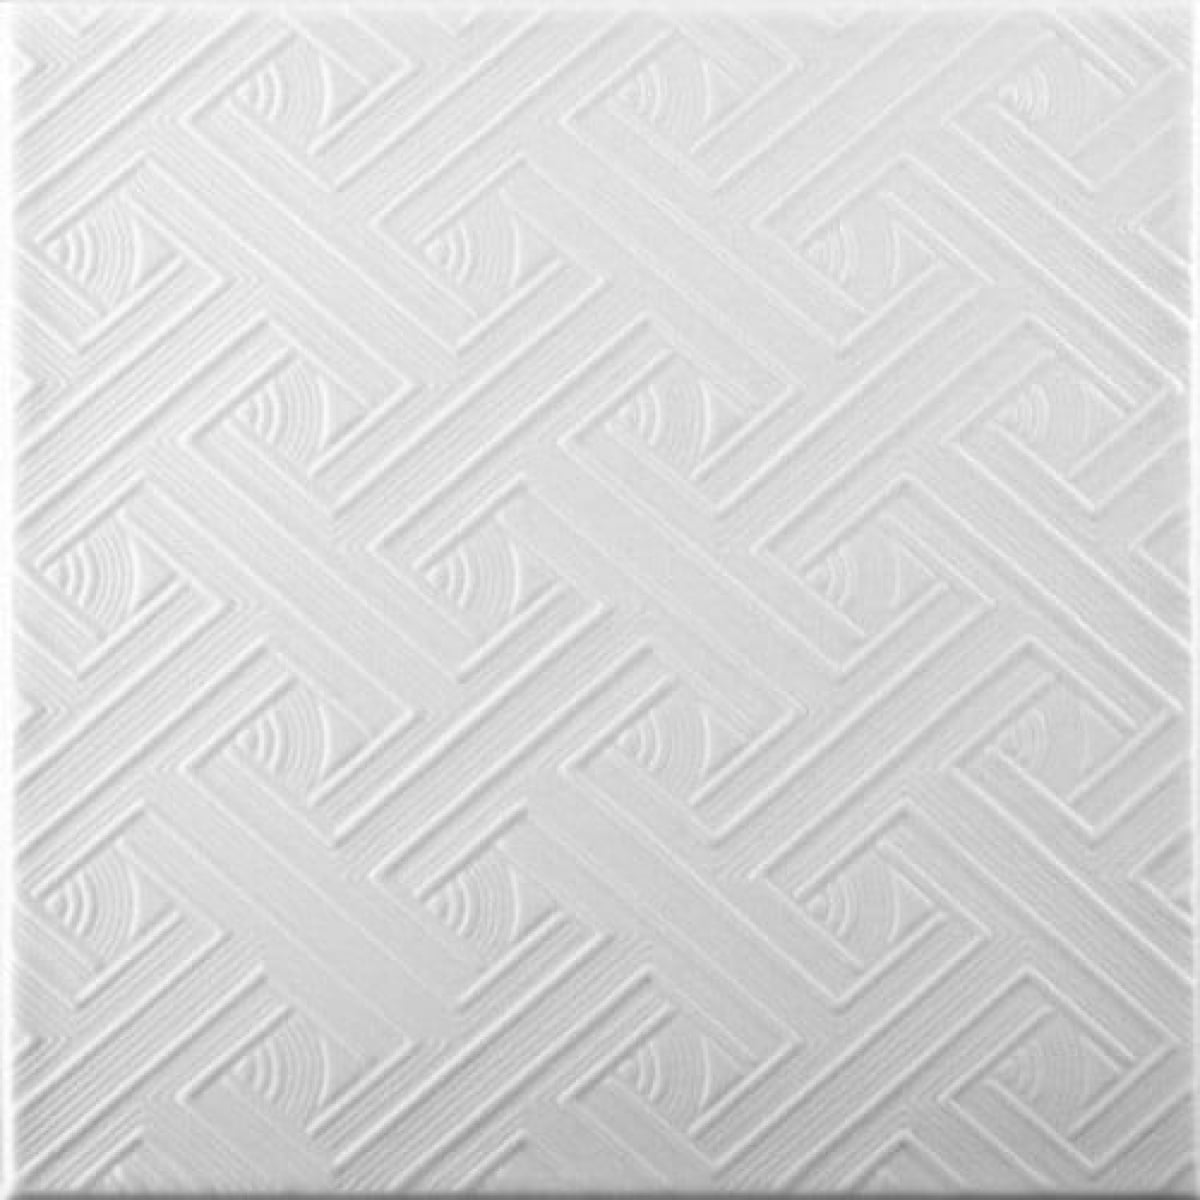 bound Magnetic creative Tavan fals decorativ, din polistiren extrudat, alb, 50 x 50 cm, 08-109,  2mp/pachet • Silvesrom • Materiale de Constructii Barlad